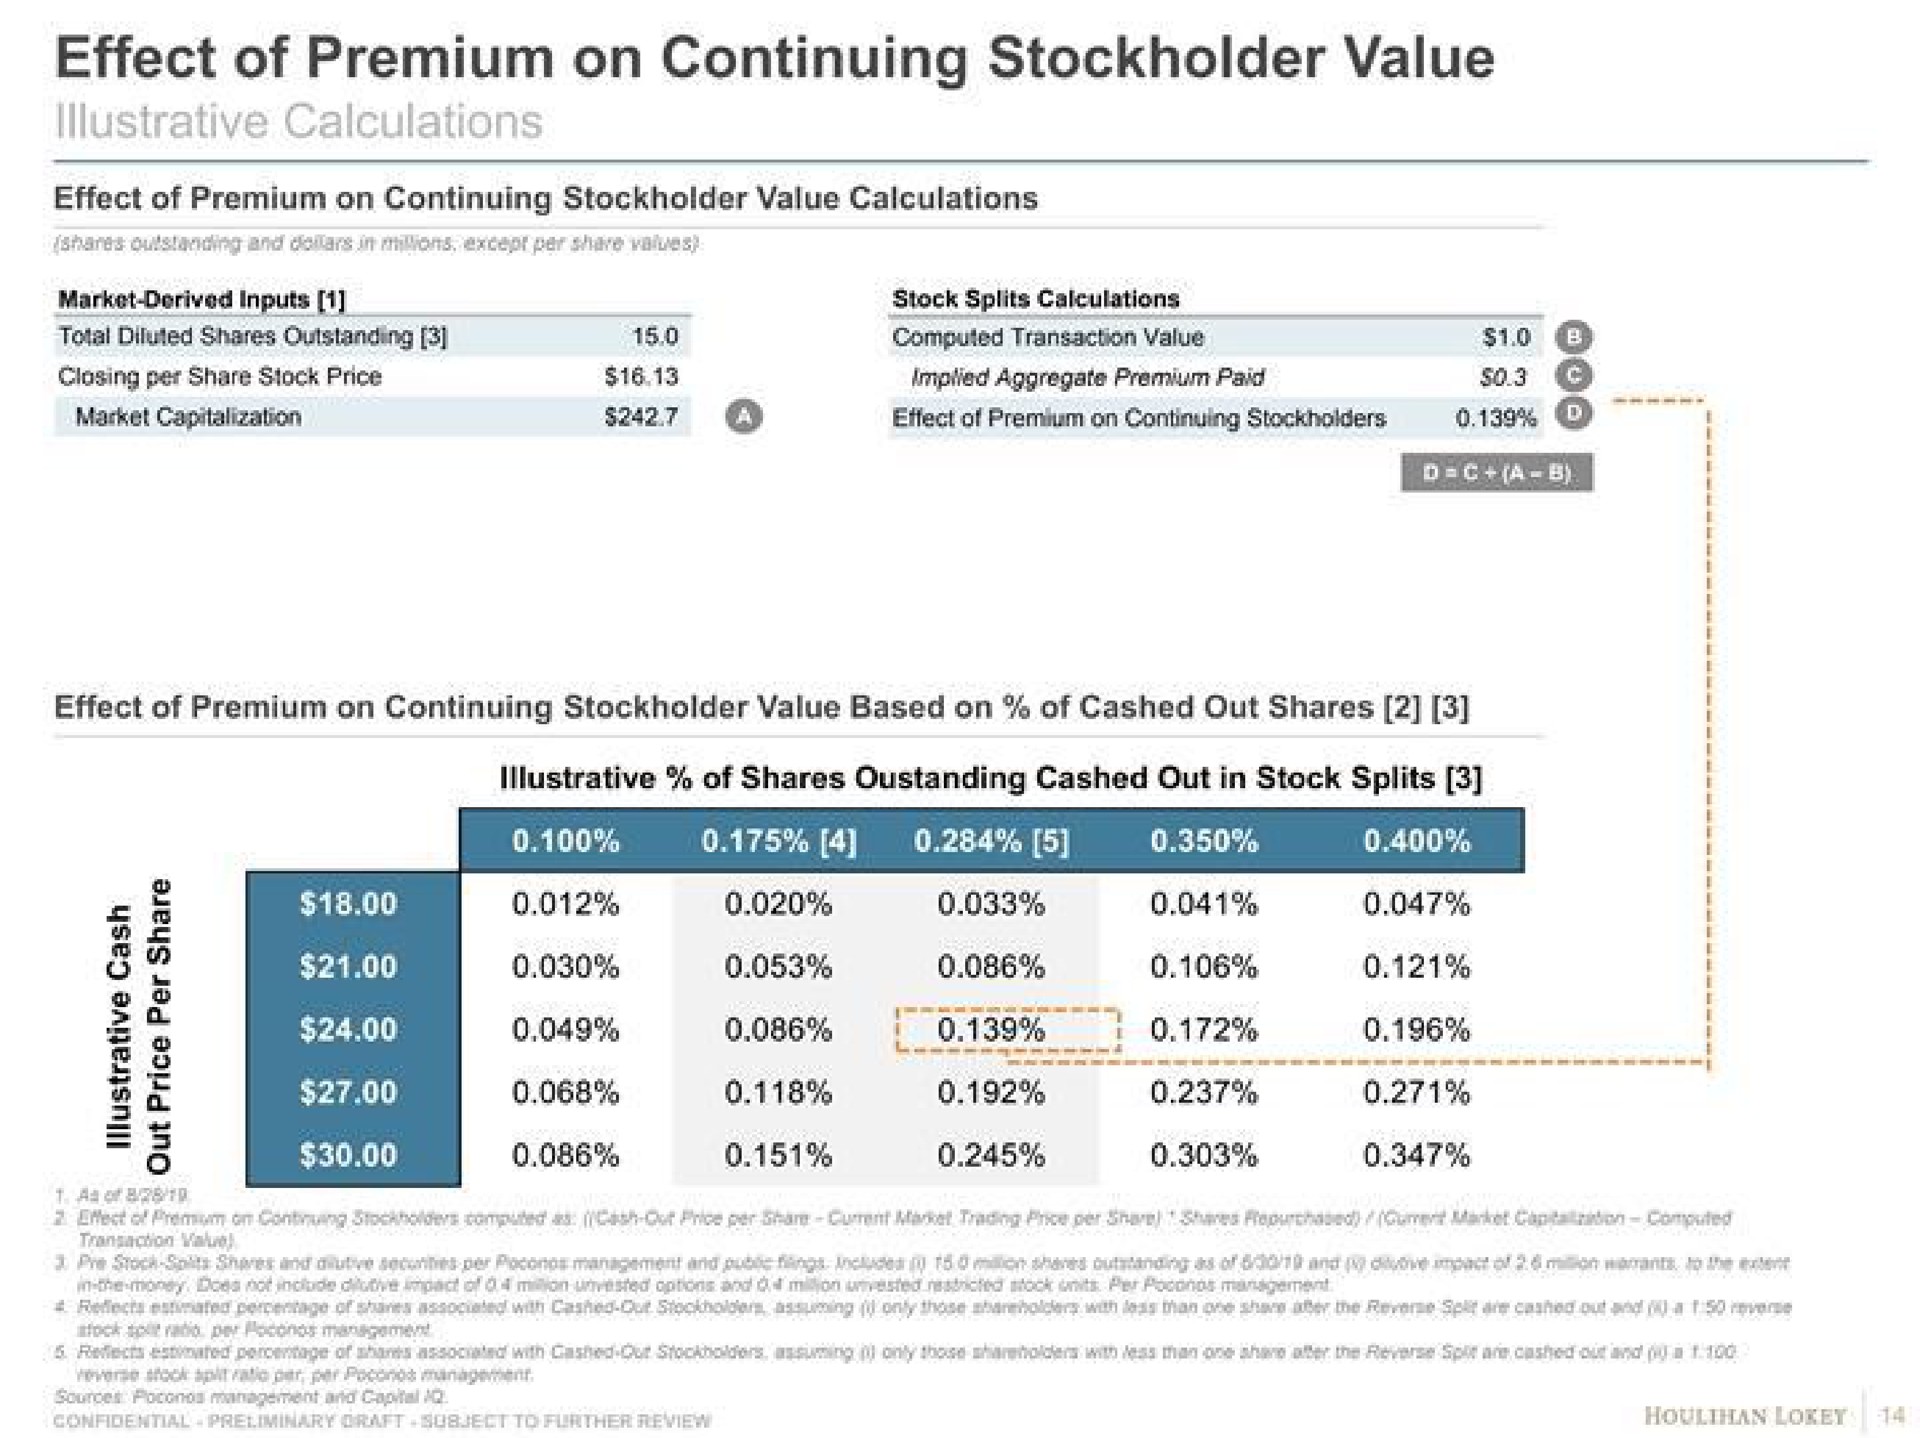 effect of premium on continuing stockholder value market capitalization a effect of premium on continuing stockholders be as a | Houlihan Lokey